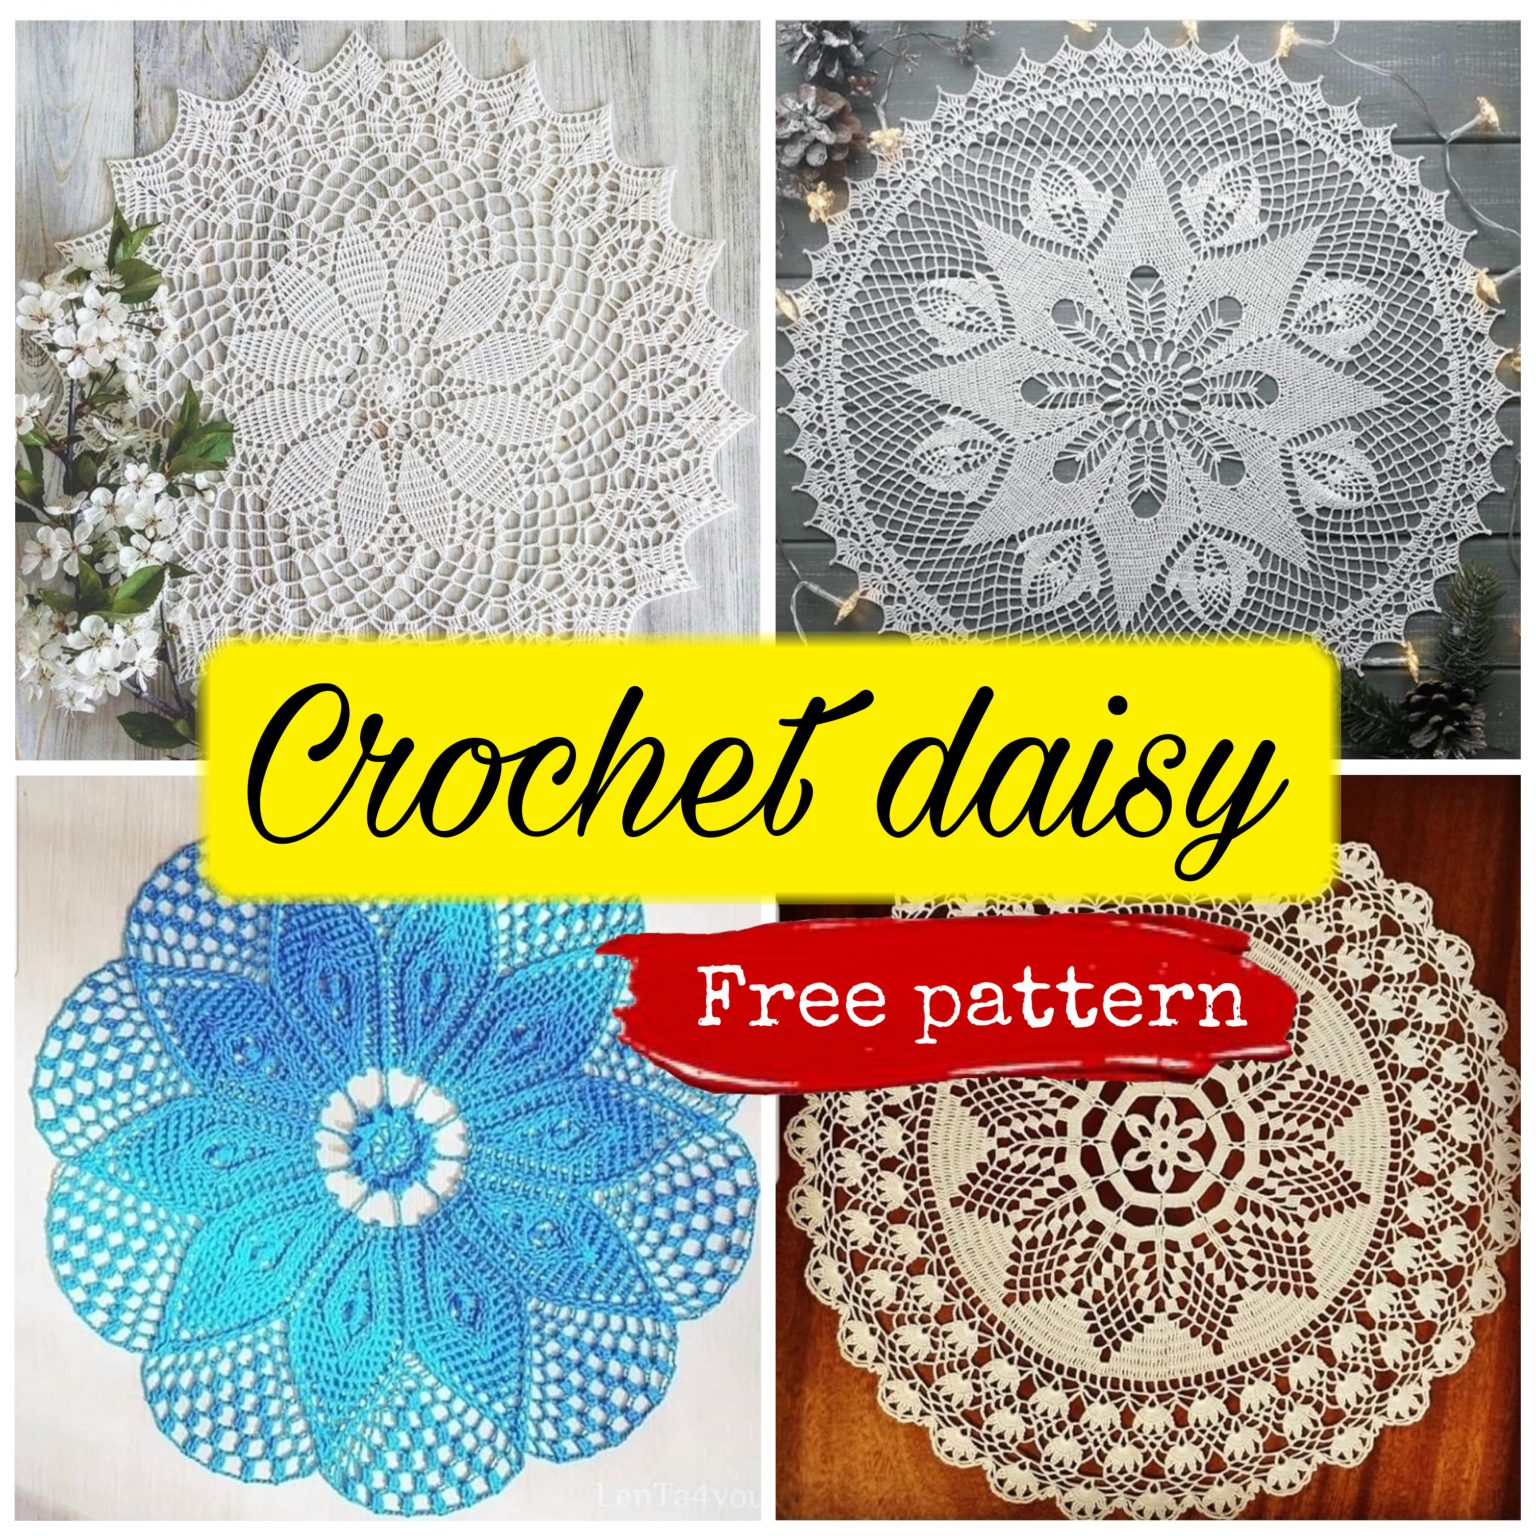 4 Free Crochet Patterns For Daisy Napkins